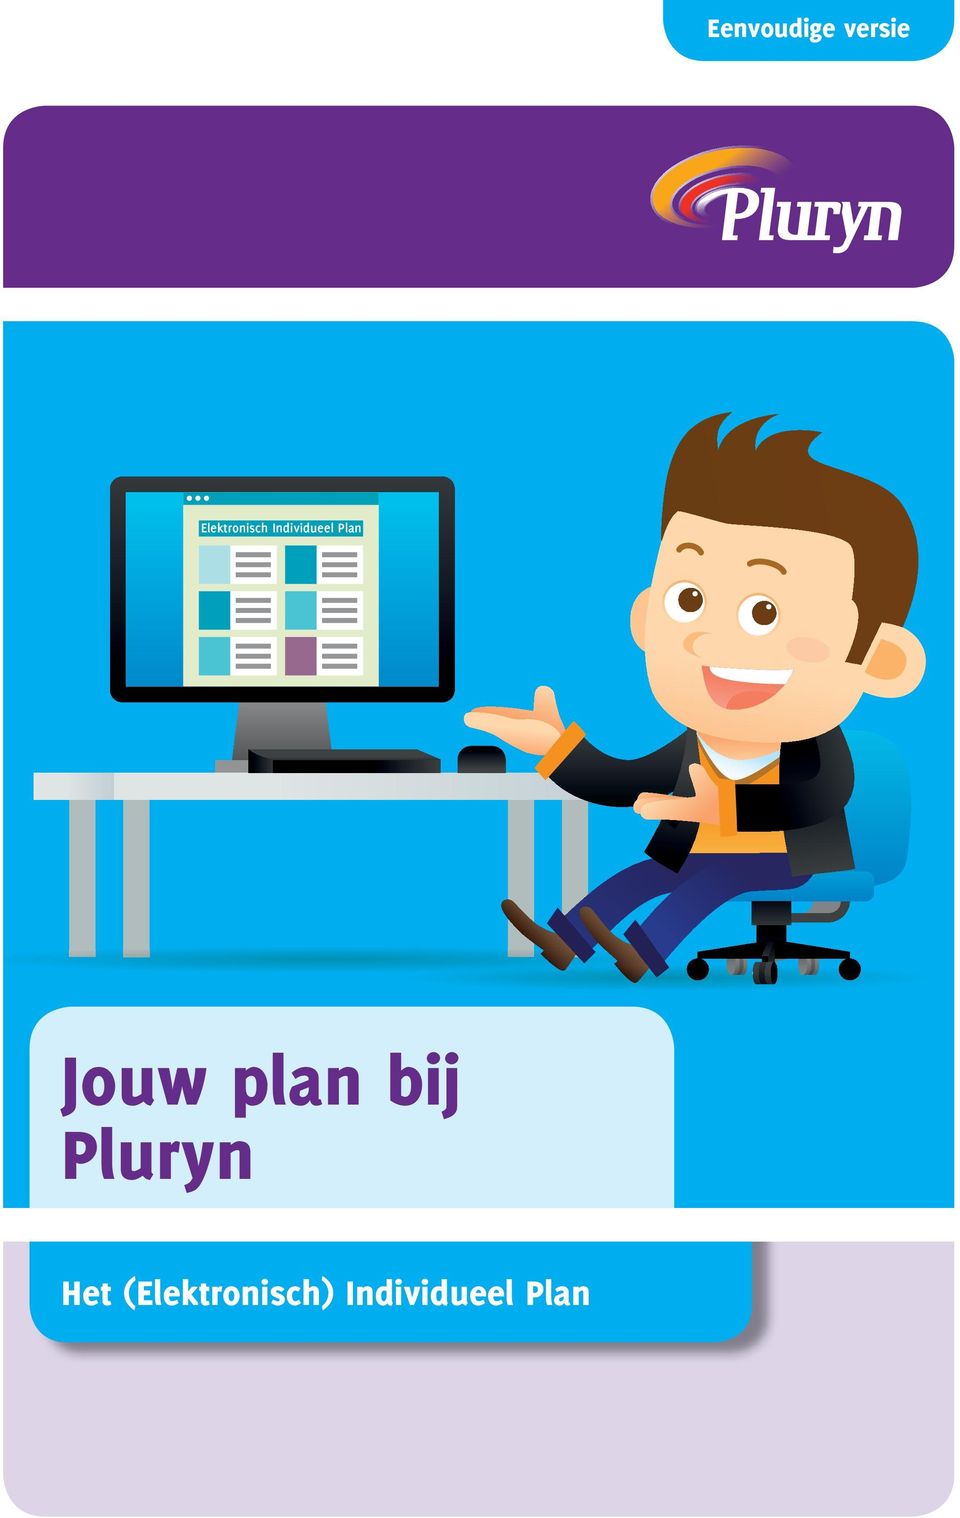 Plan Jouw plan bij Pluryn